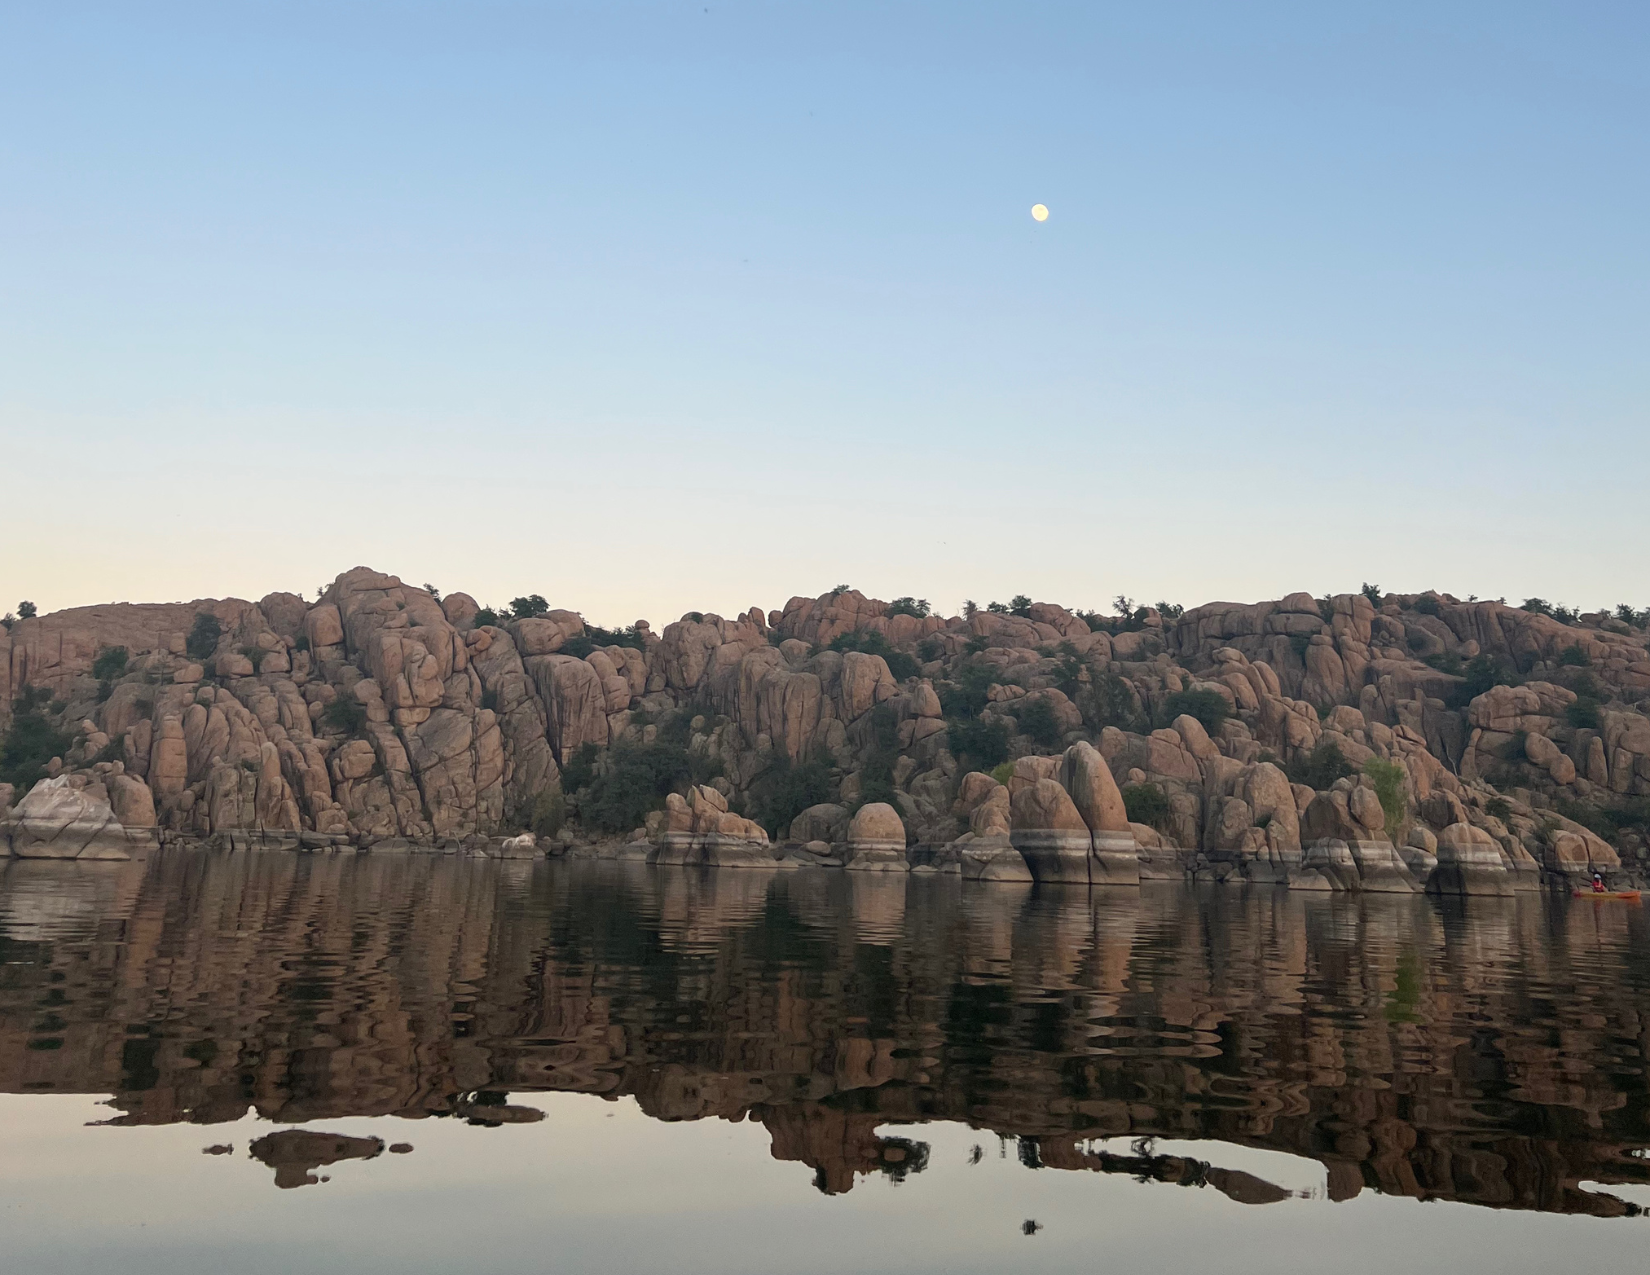 Incredible view of water reflecting the granite boulders on Watson Lake in Prescott, Arizona during a full moon